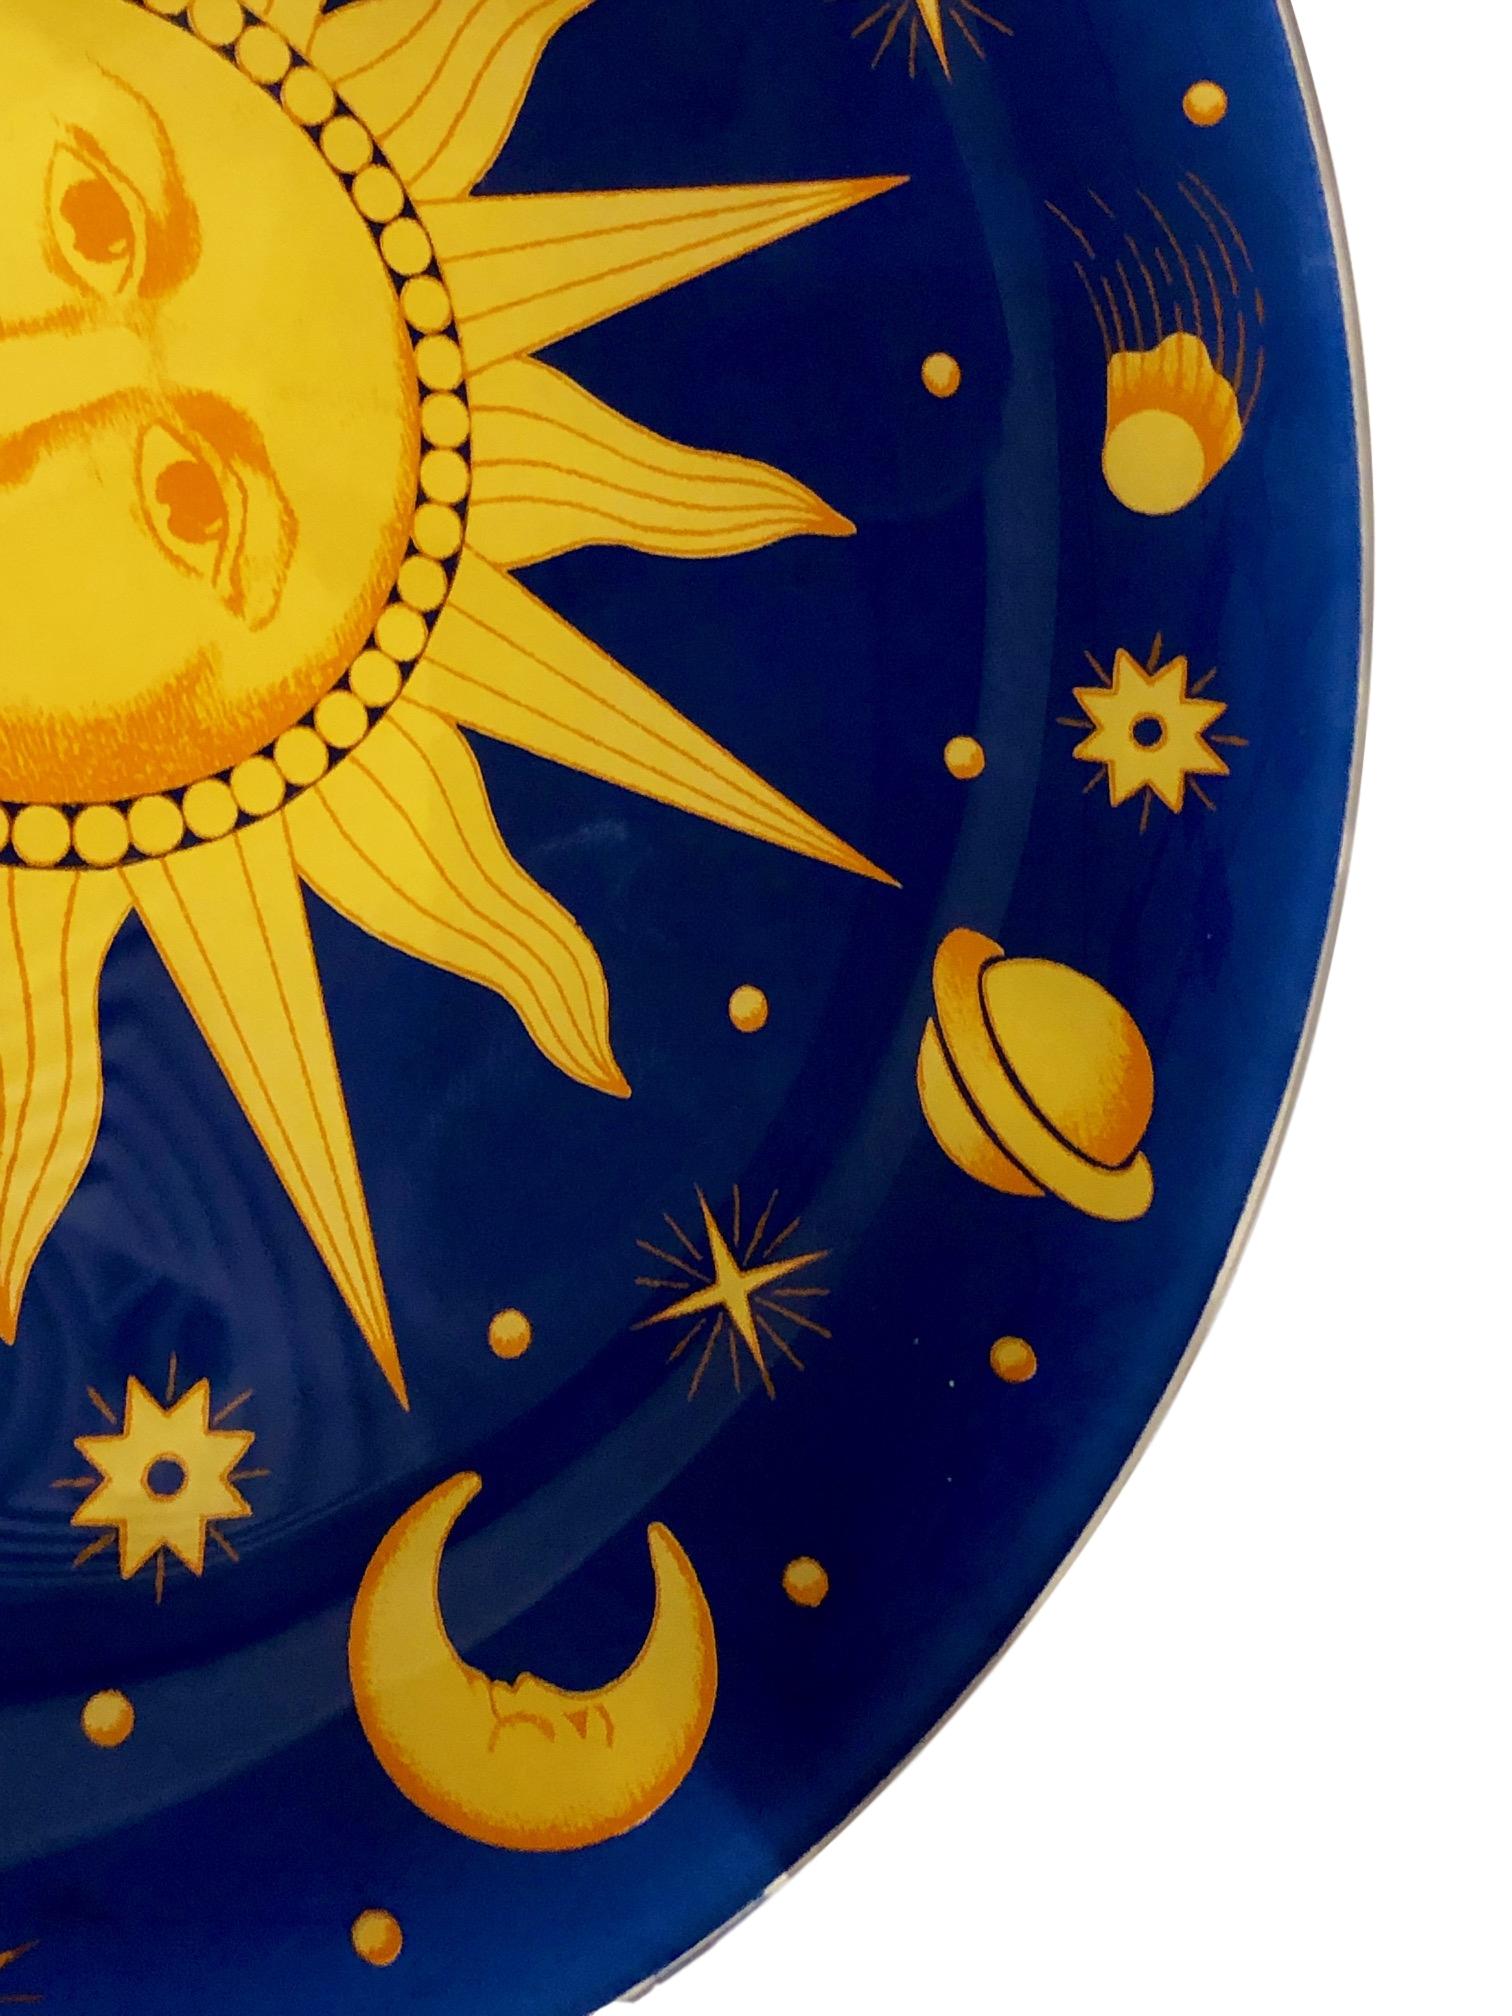 Mid-20th Century Italian Celestial Glass Plate For Sale